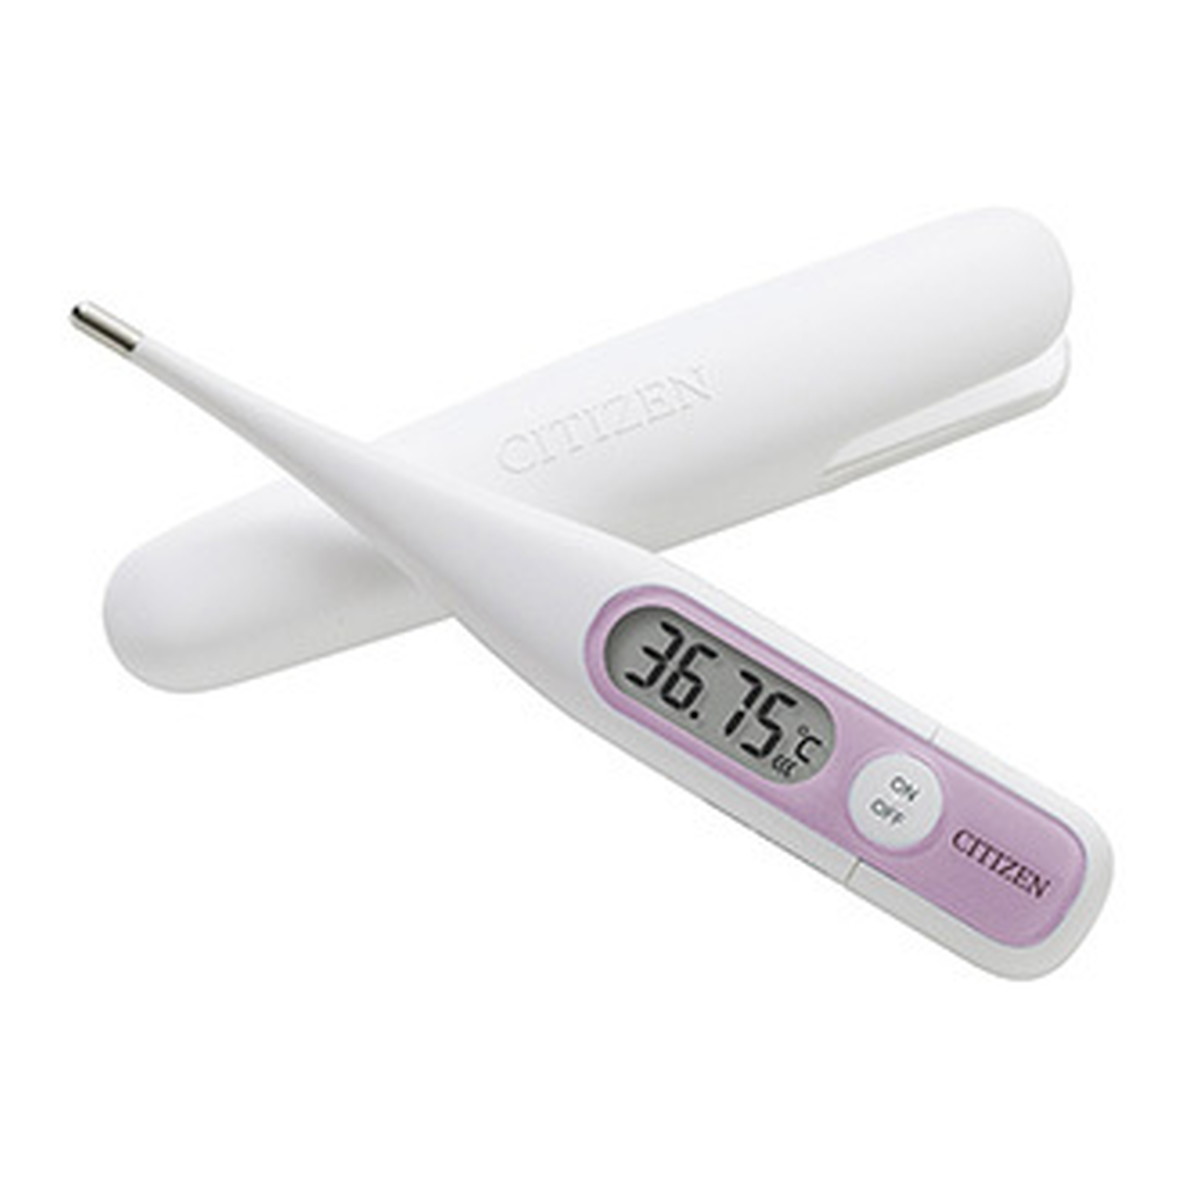 シチズン 予測式 電子体温計 CTEB503L-E 婦人用 口中専用